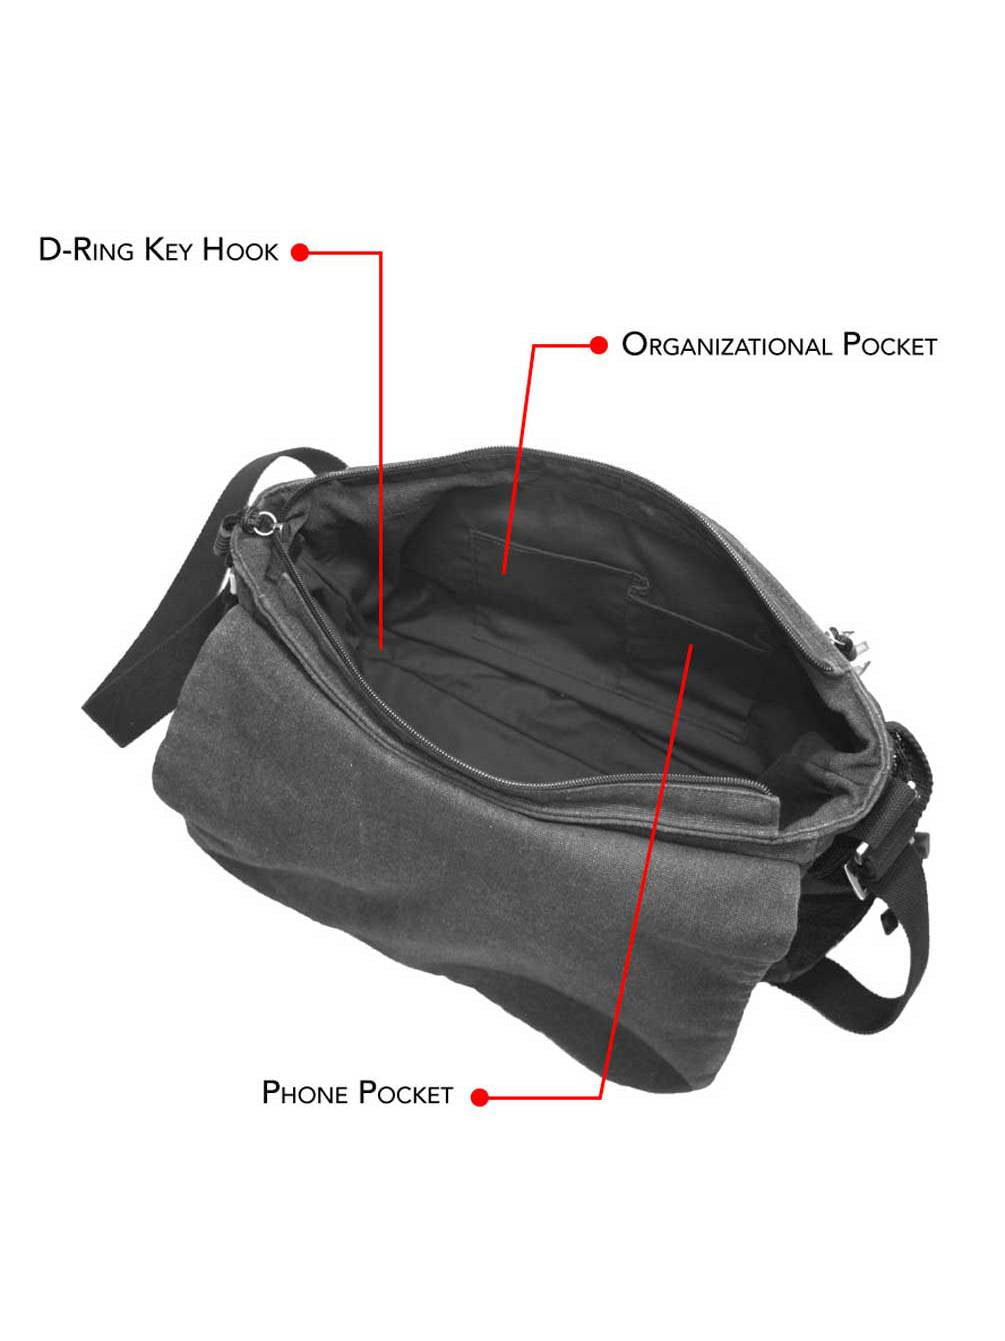 ROUT Voyager Messenger Bag, Washed Black Cotton Canvas & Leather Trim  RC10525 